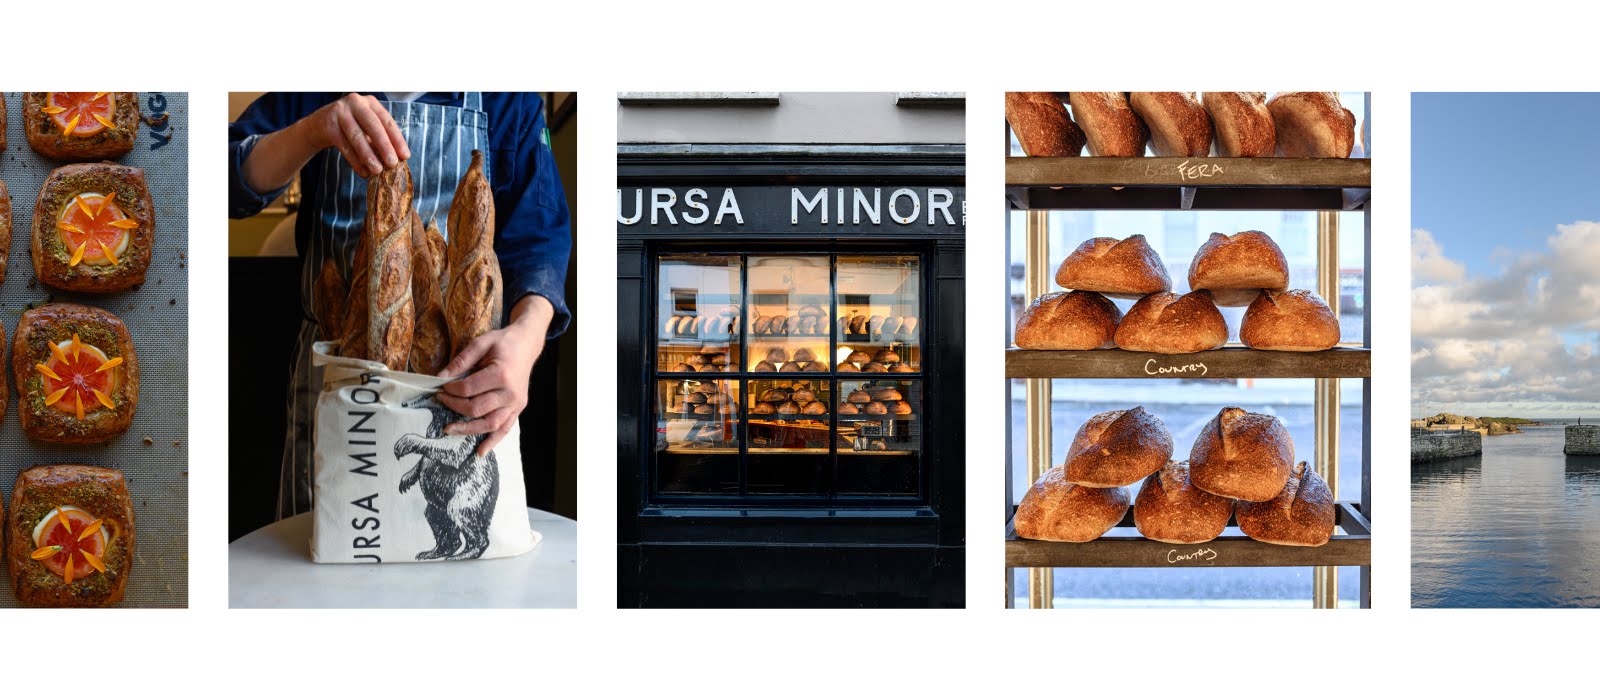 Meet Ursa Minor in Antrim, the bakery making the most of seasonal produce